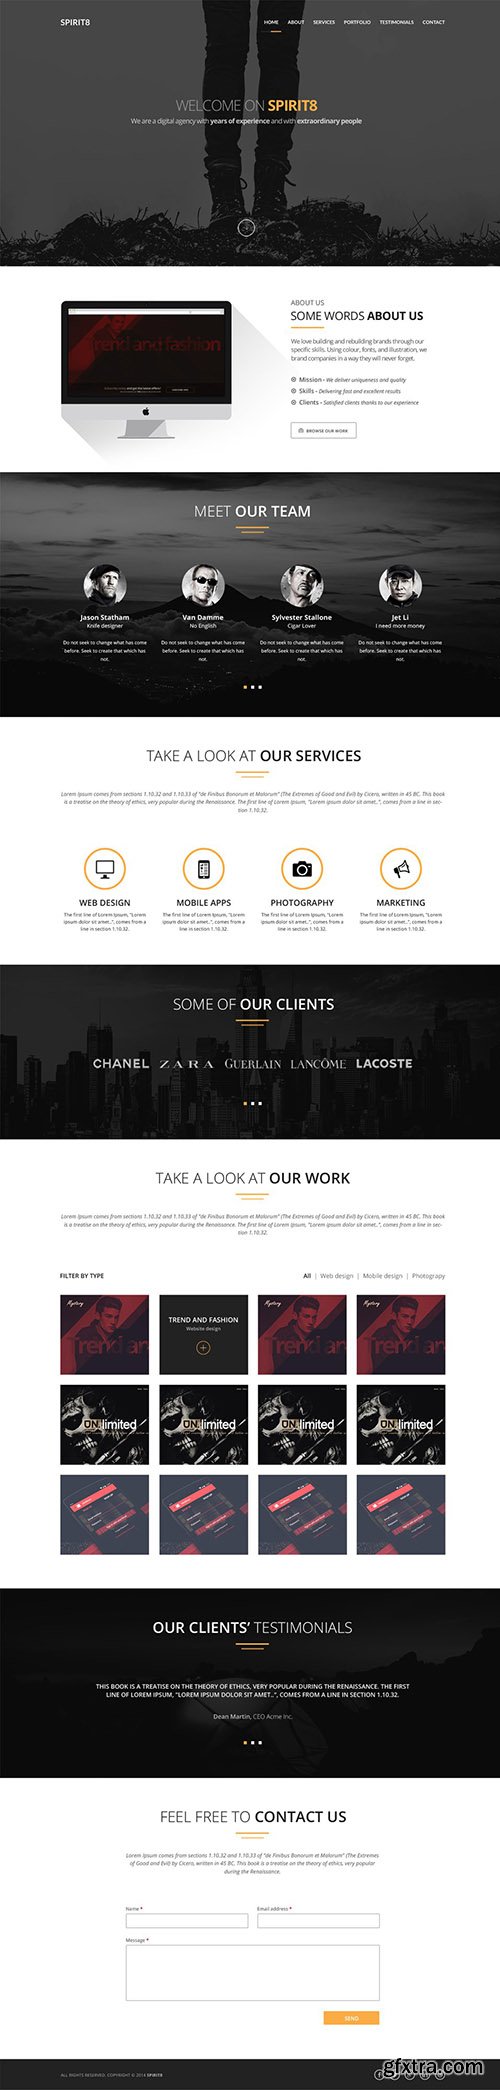 PSD Web Template - Spirit8 - Digital Agency One Page Theme